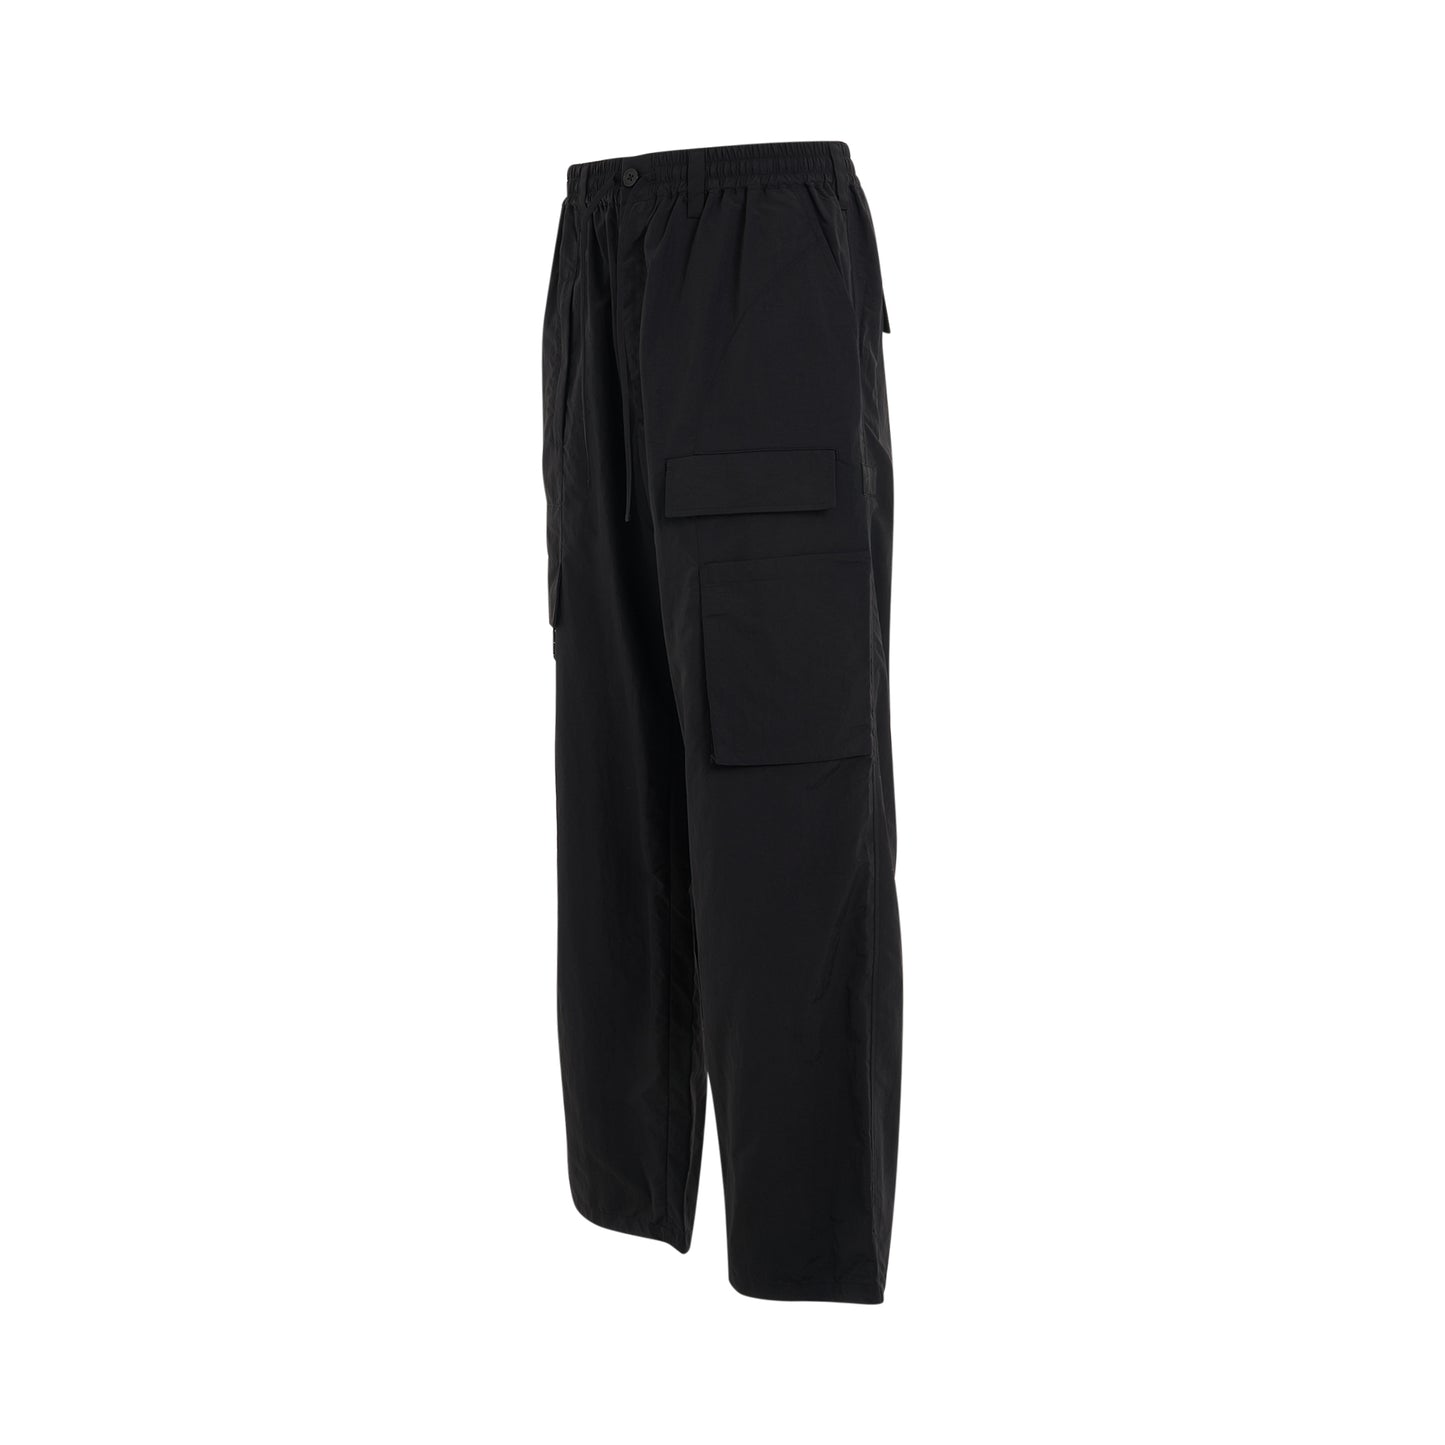 Crinkle Nylon Pants in Black